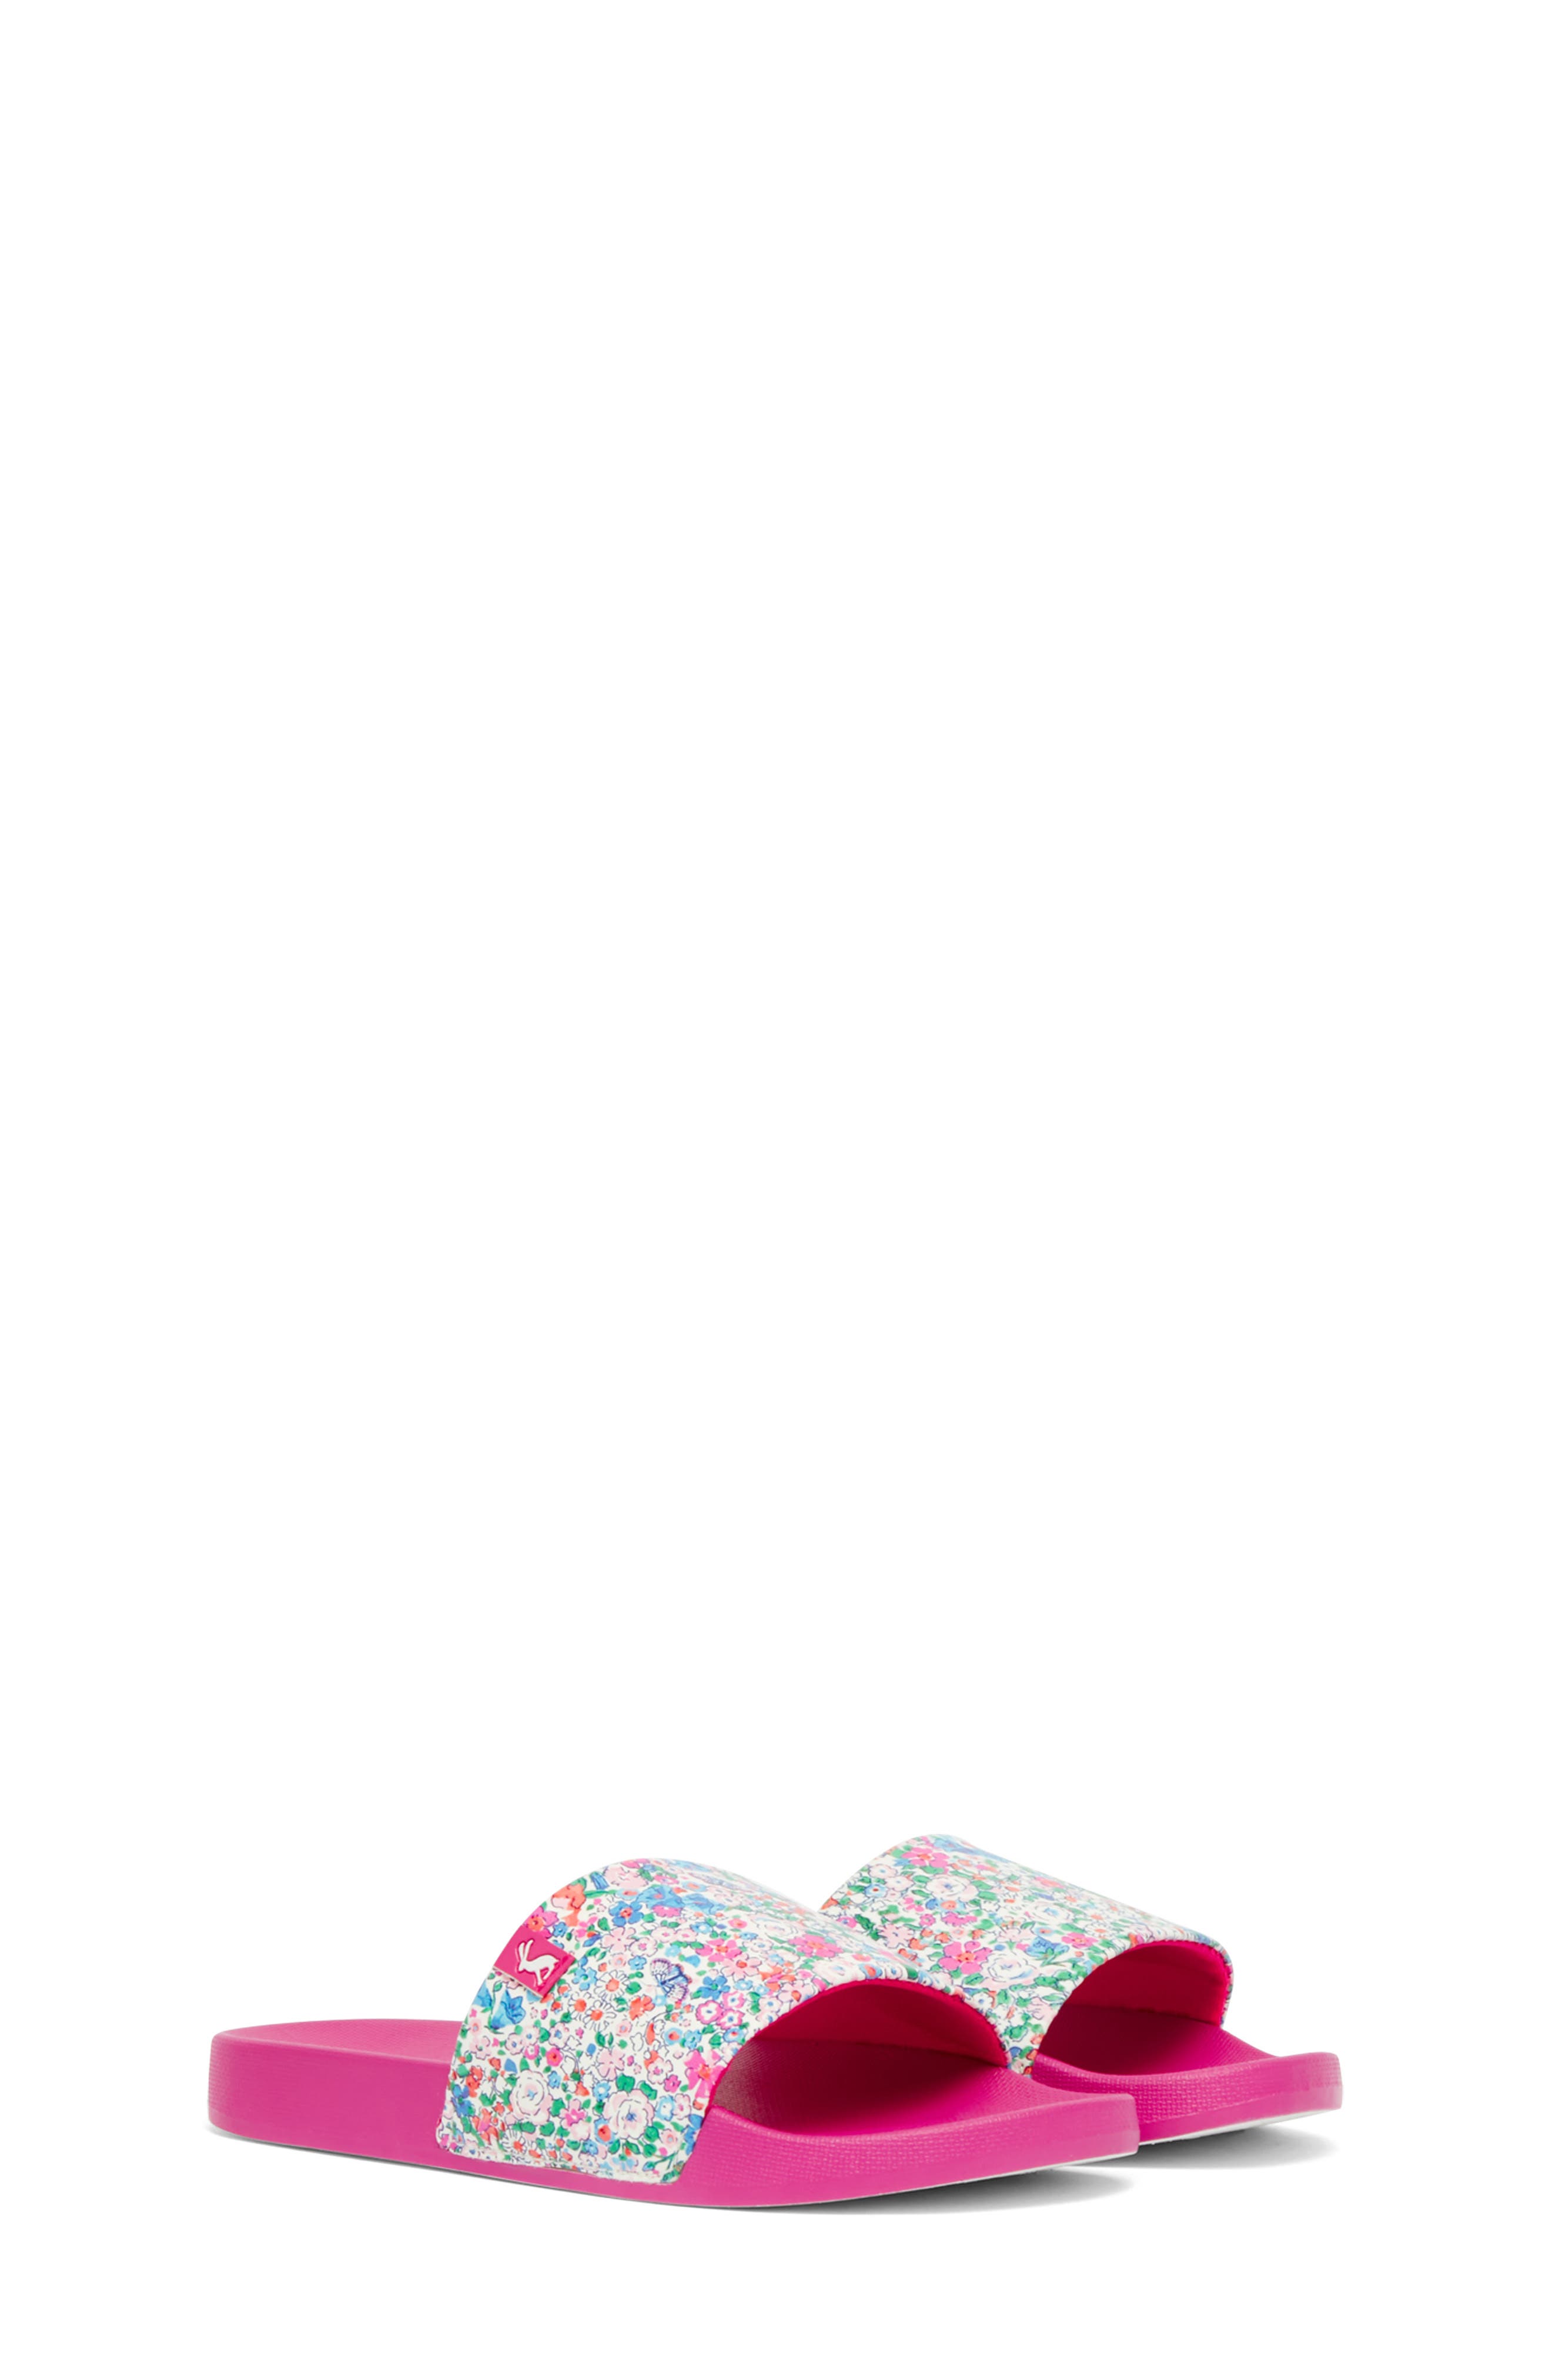 NEW Toddler Girls Sandals Large 9-10 Pink Summer Wedding Thongs Shoes Flower 